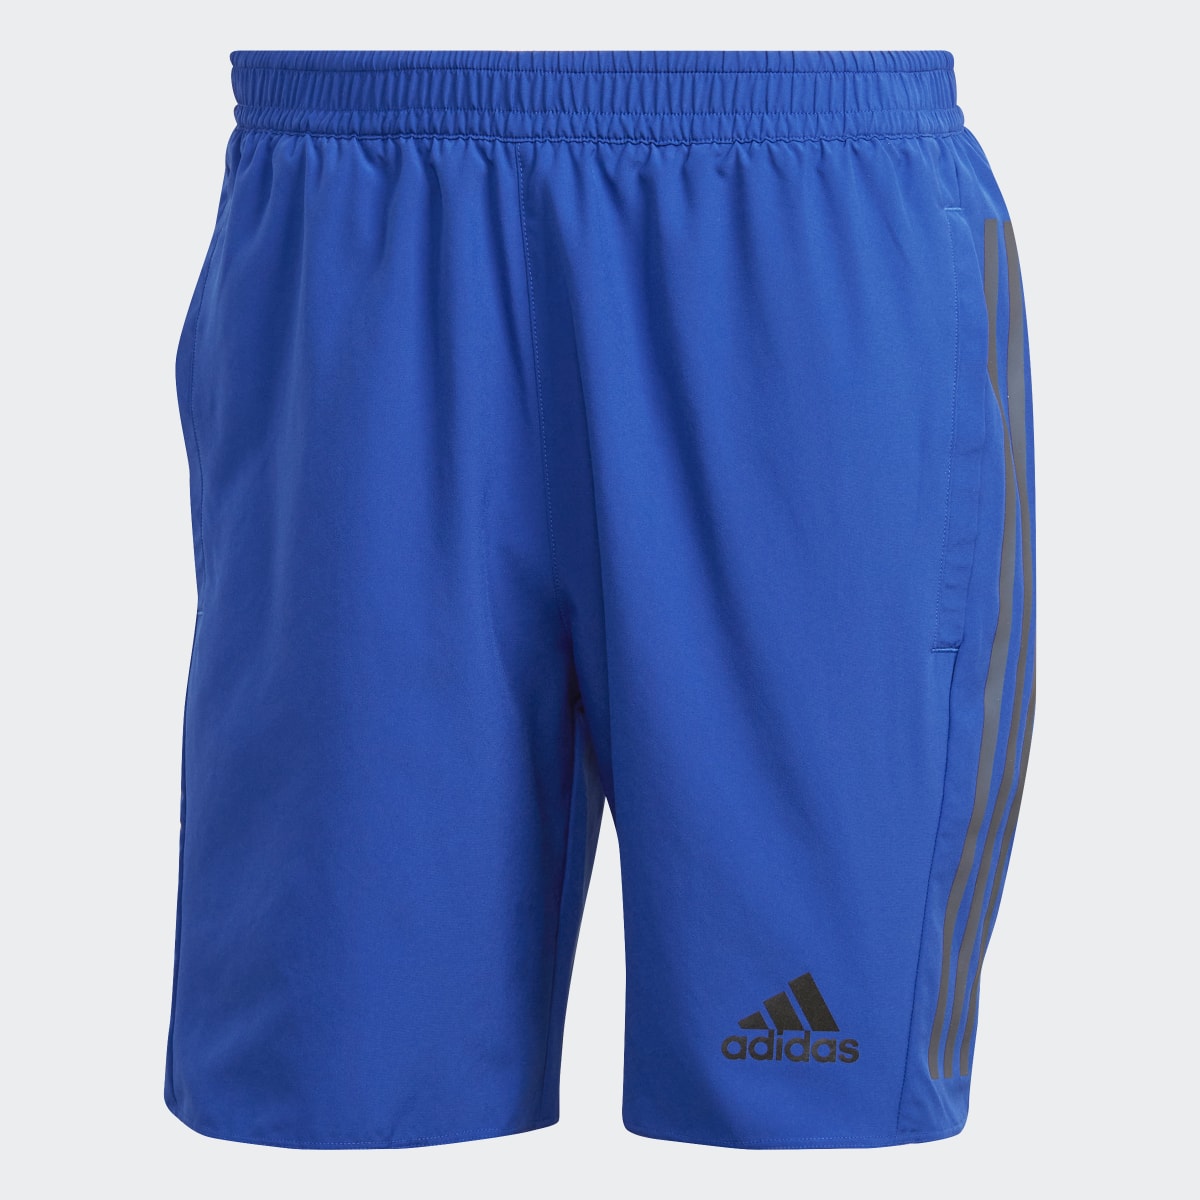 Adidas Run Icon Full Reflective 3-Stripes Shorts. 4